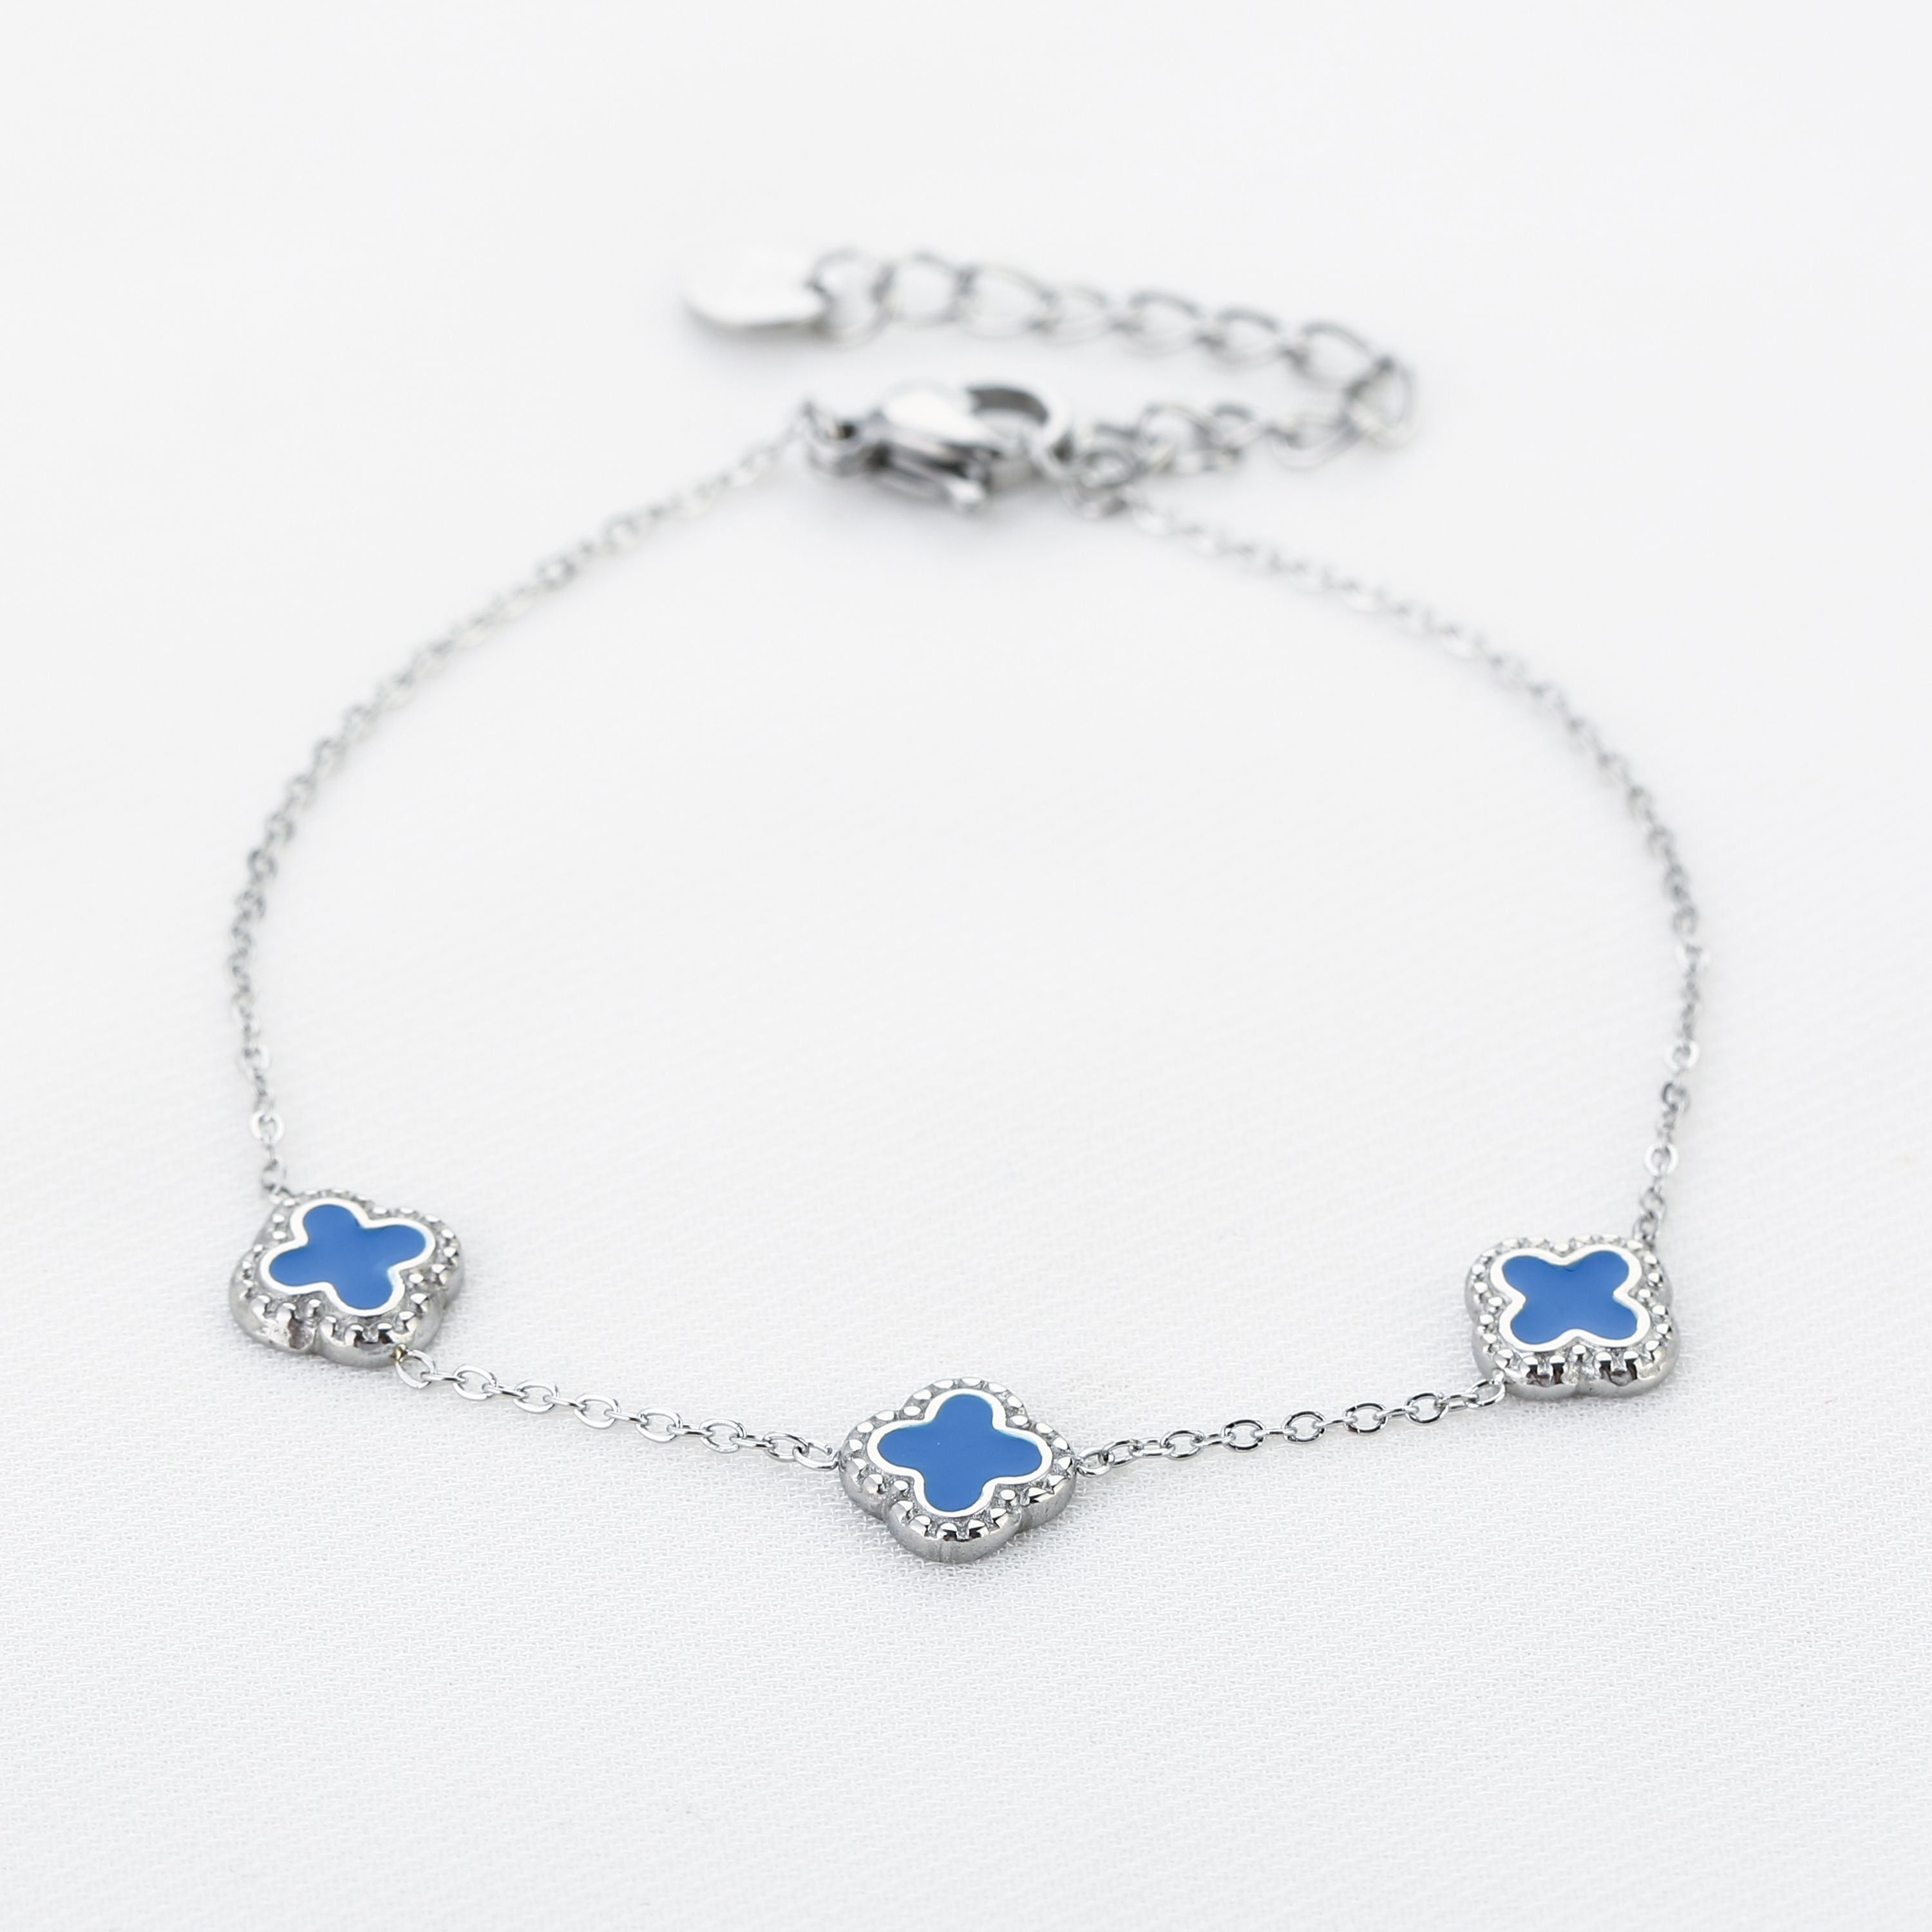 Bracelet clovers | blue/silver